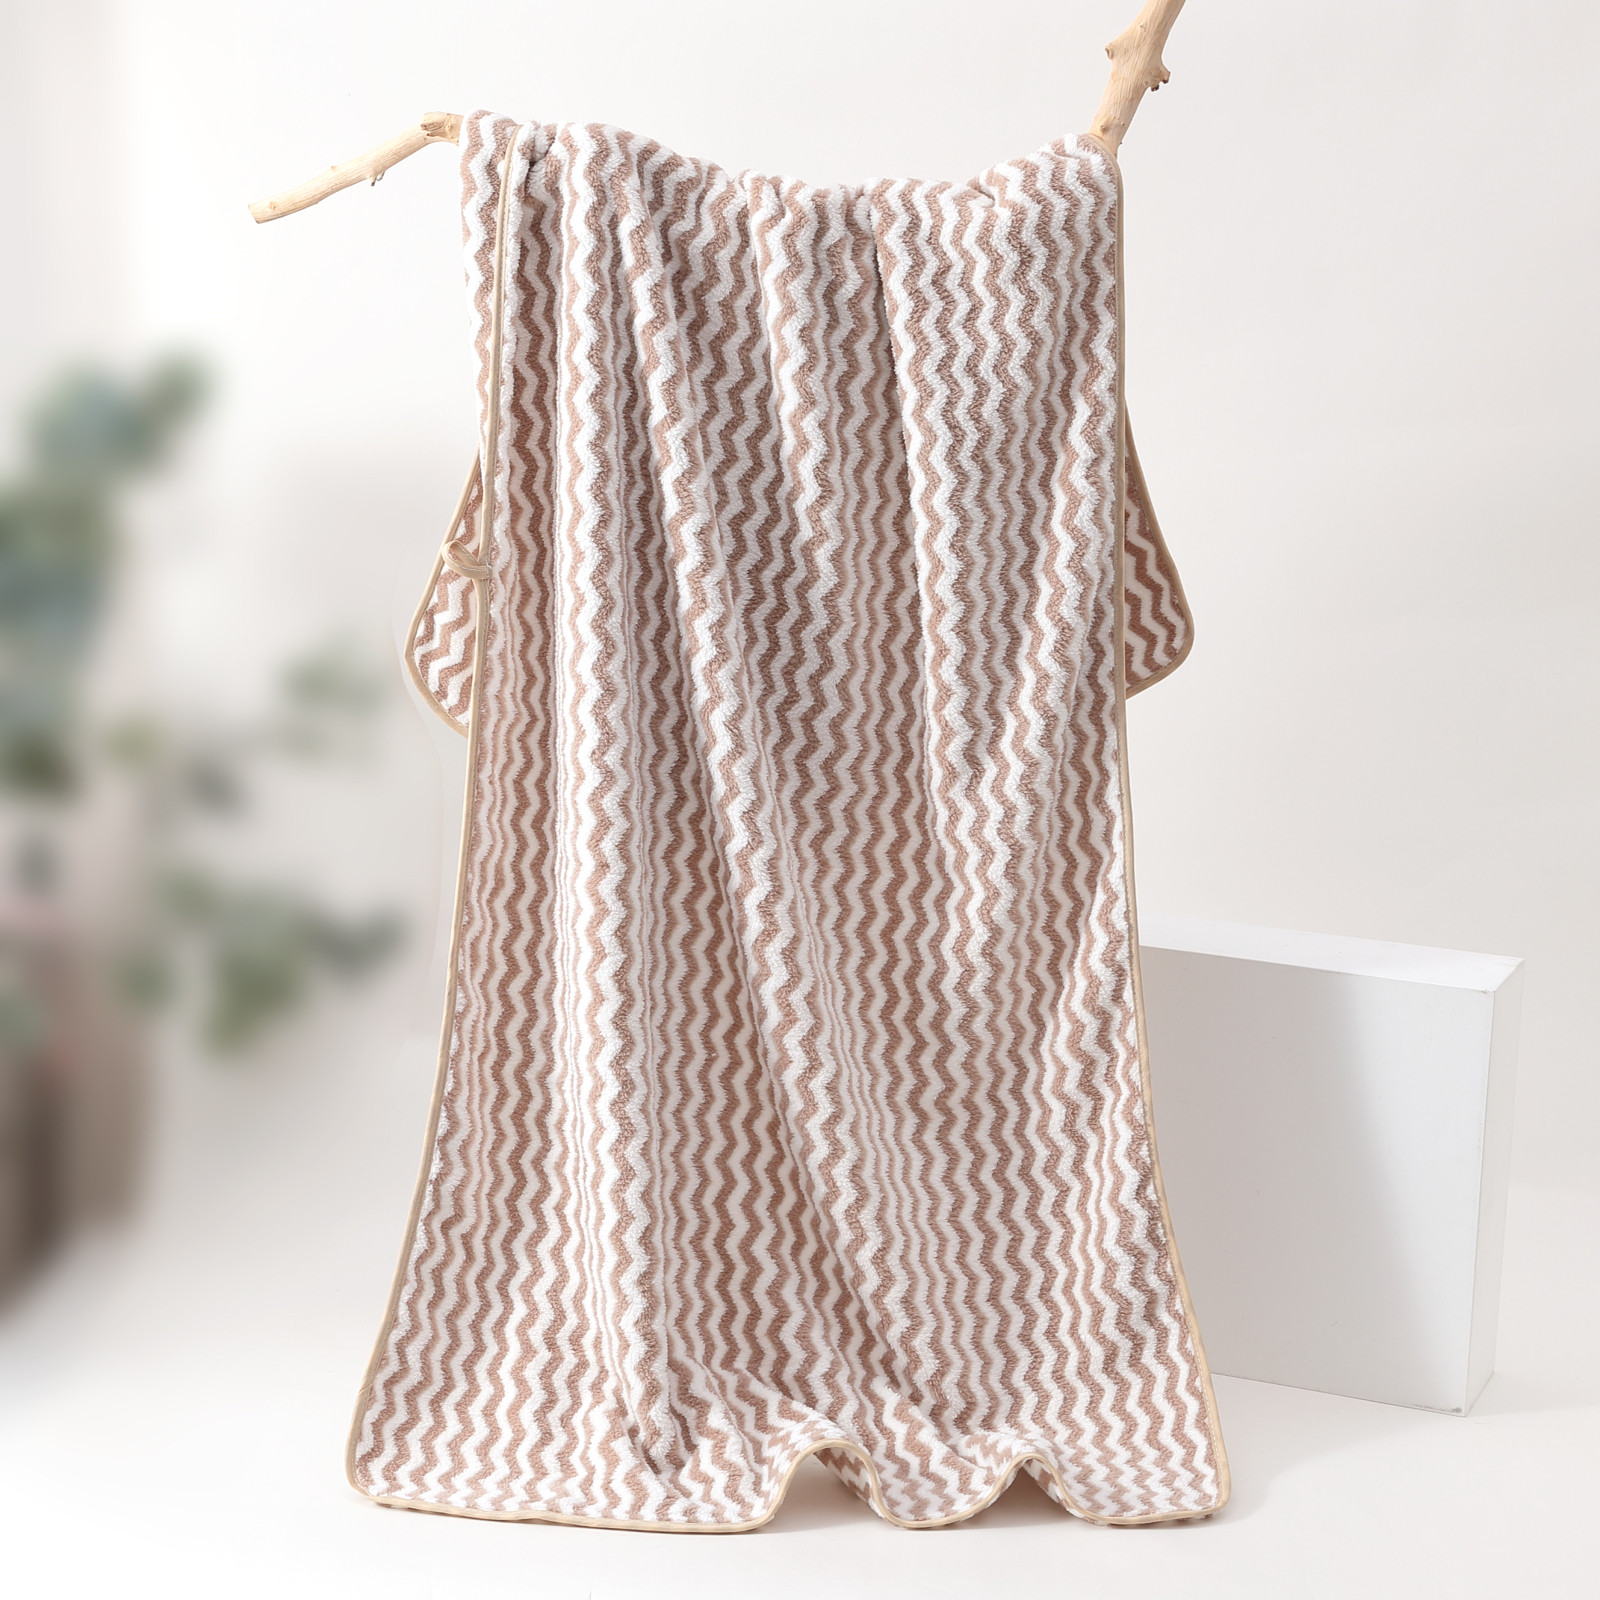 Kuber Industries Bath Towel For Men, Women|280 GSM|Extra Soft & Fade Resistant|Polyester Towels For Bath|Stripes Design|Bathing Towel, Bath Sheet (Brown)